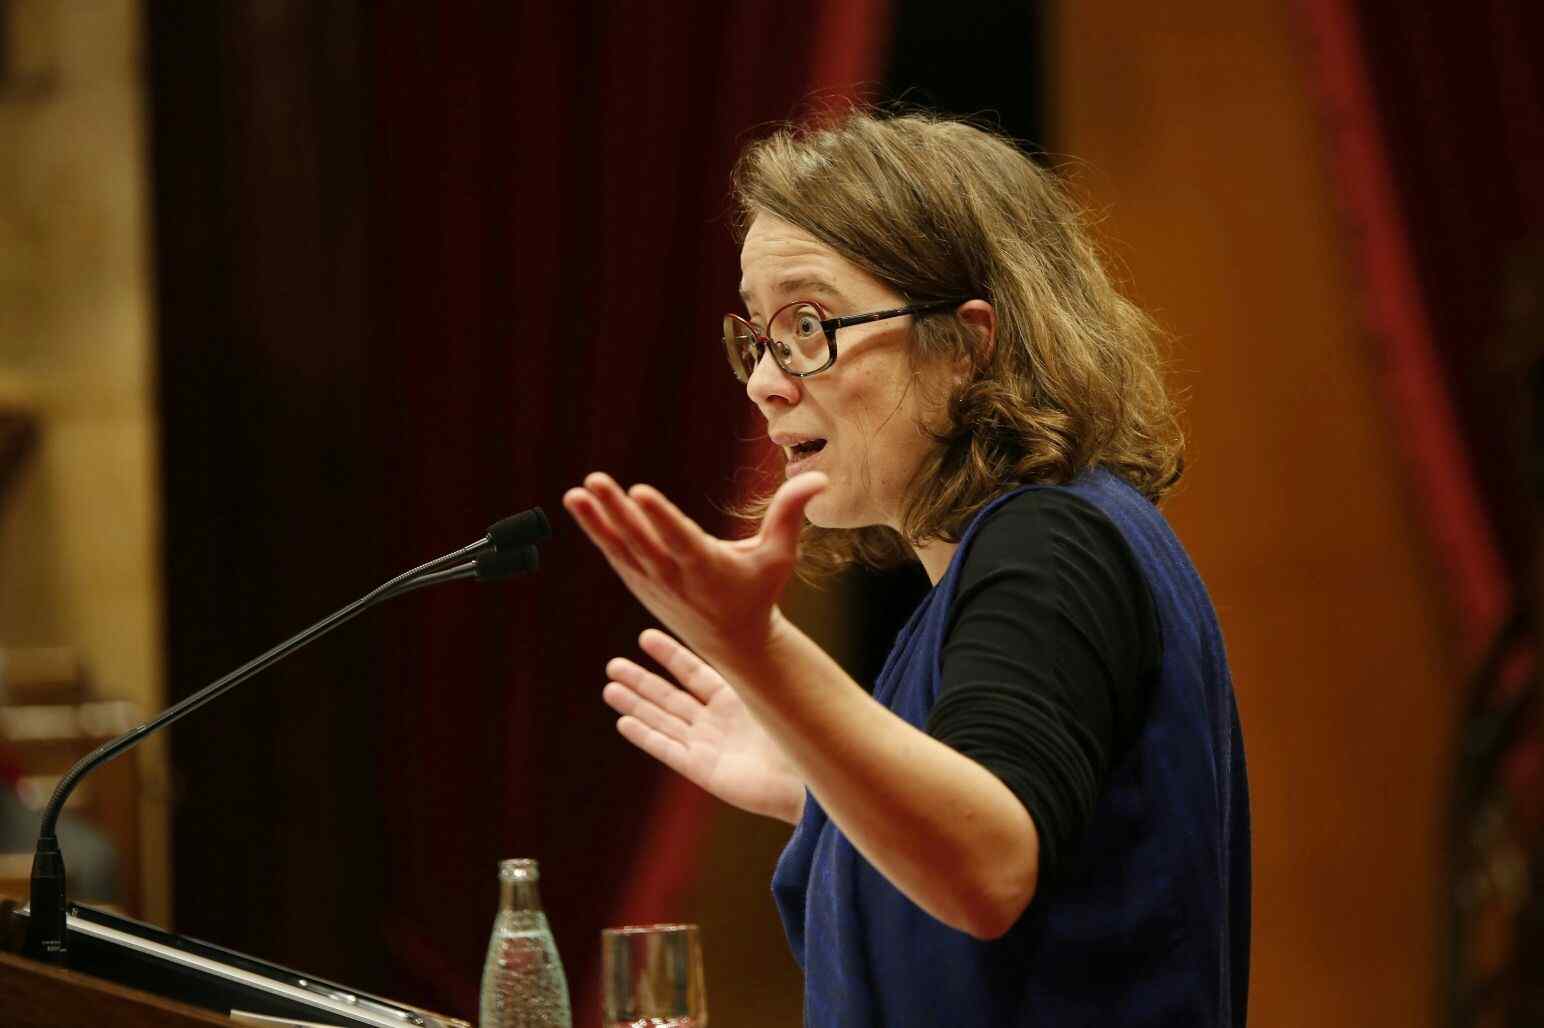 Reguant titlla la carta de Puigdemont de "ramonetisme"